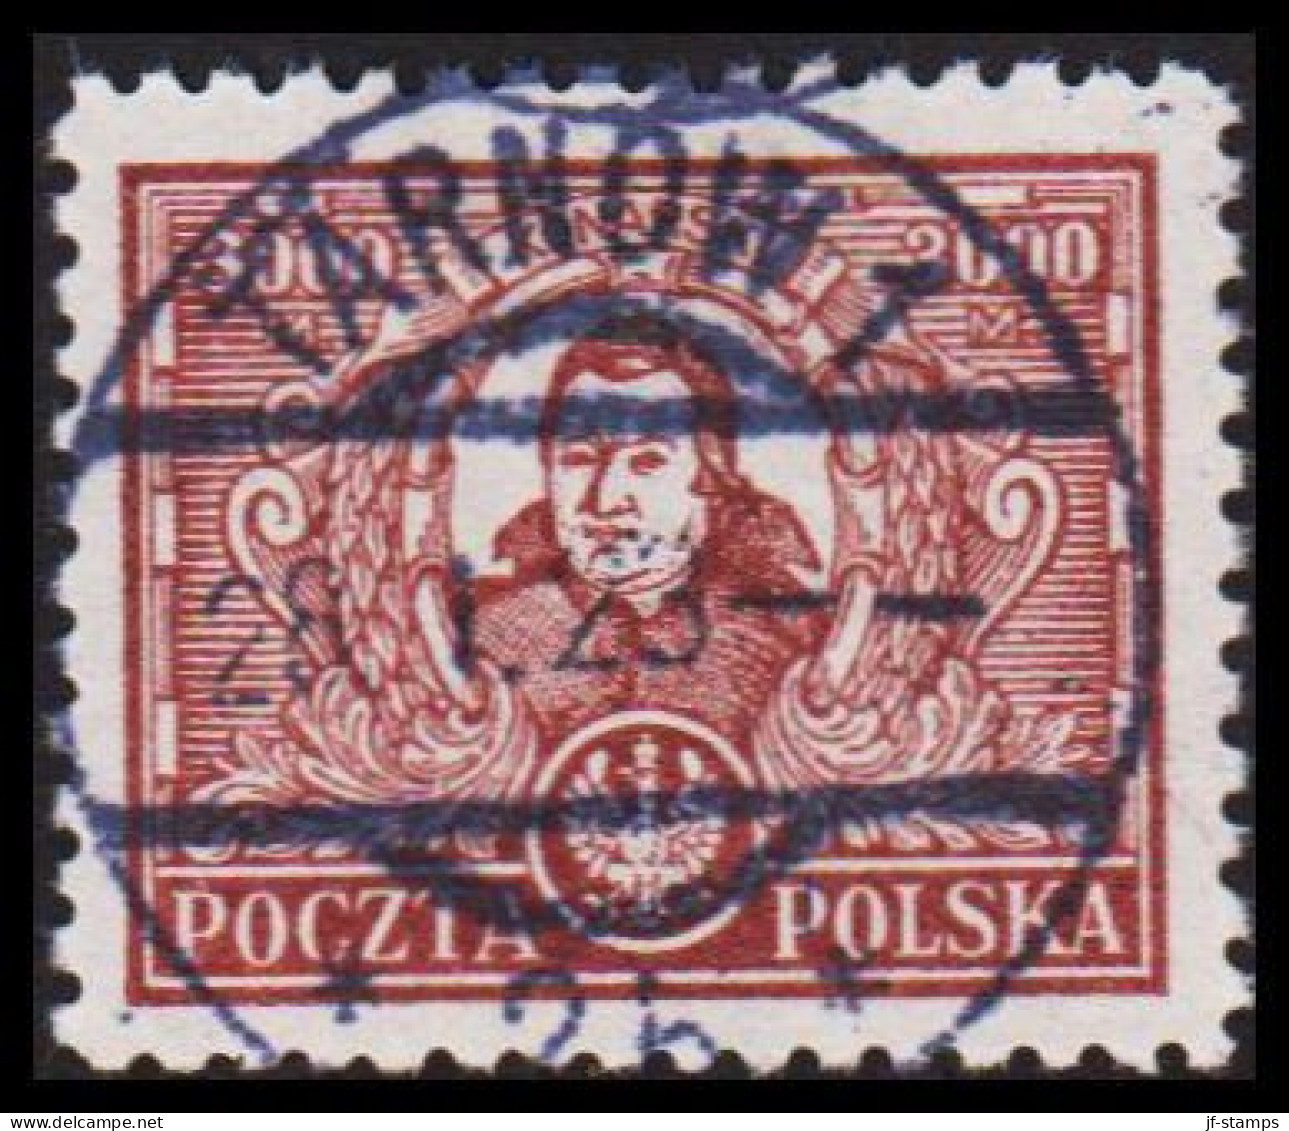 1923. POLSKA.  KONARSKI 3000 M. Luxus Cancel TARNOW 28 1 23.  (Michel 183) - JF545900 - Used Stamps